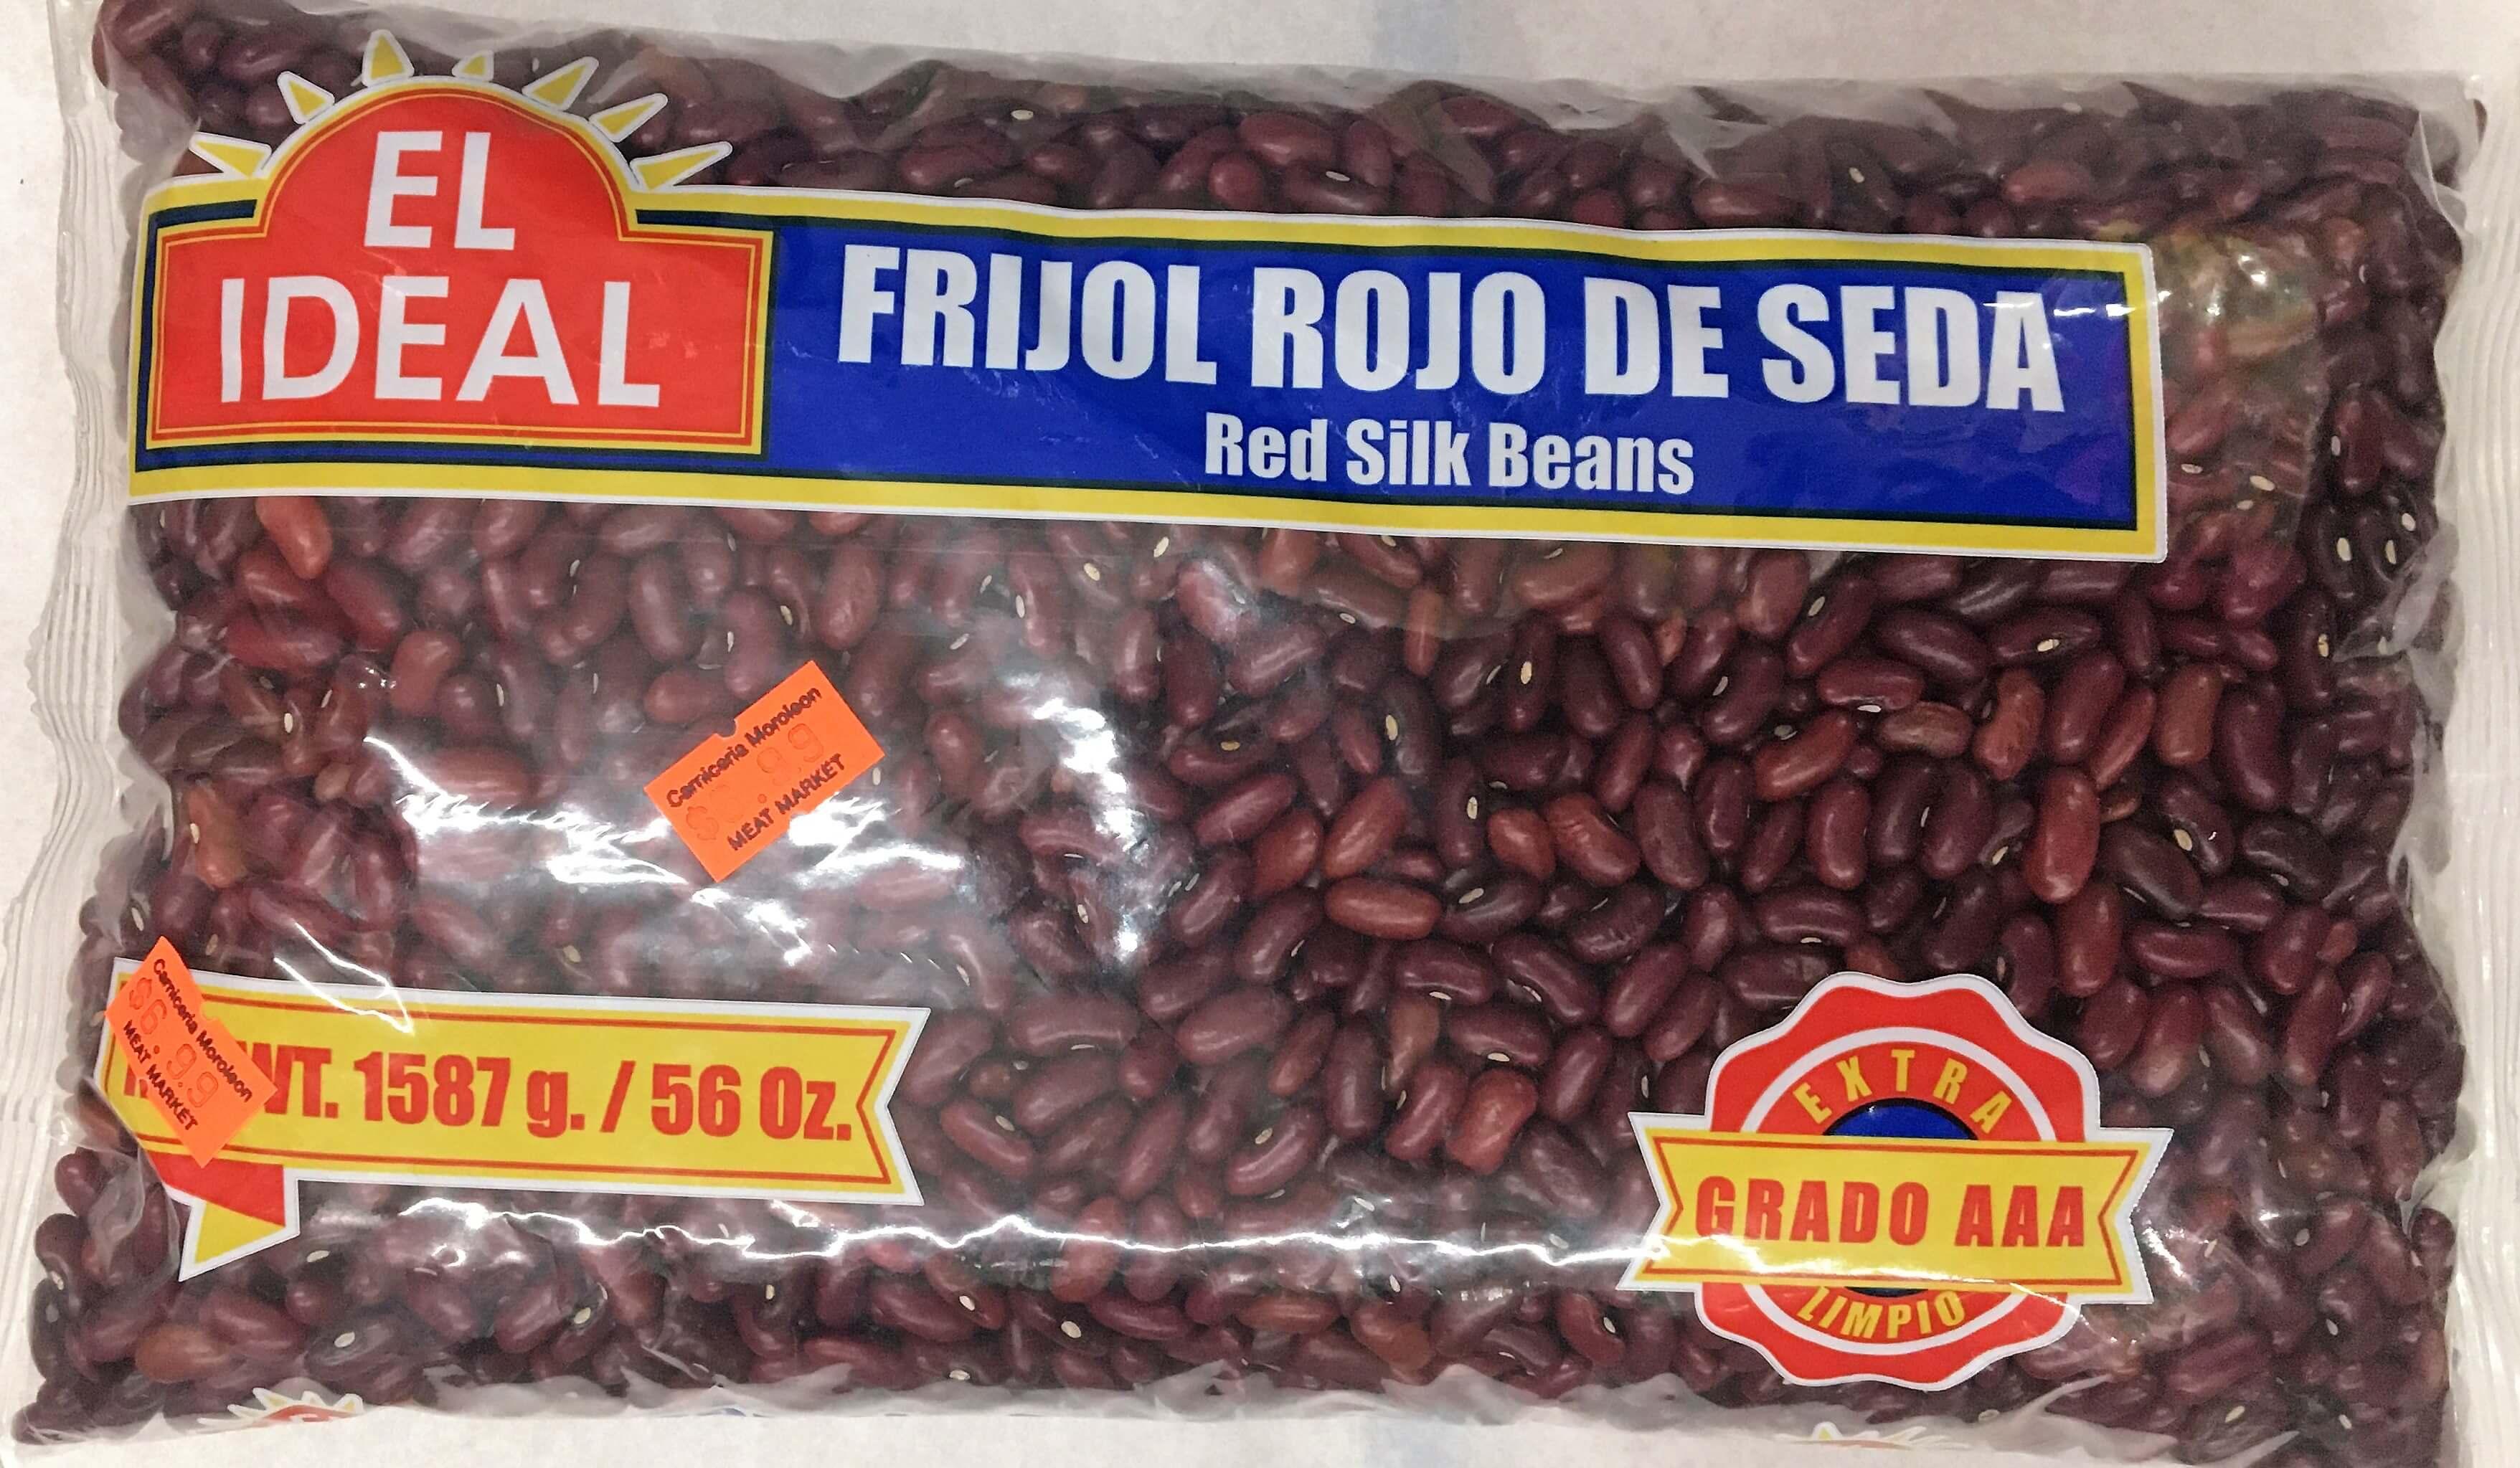 El Ideal - Red Silk Beans - 56oz.